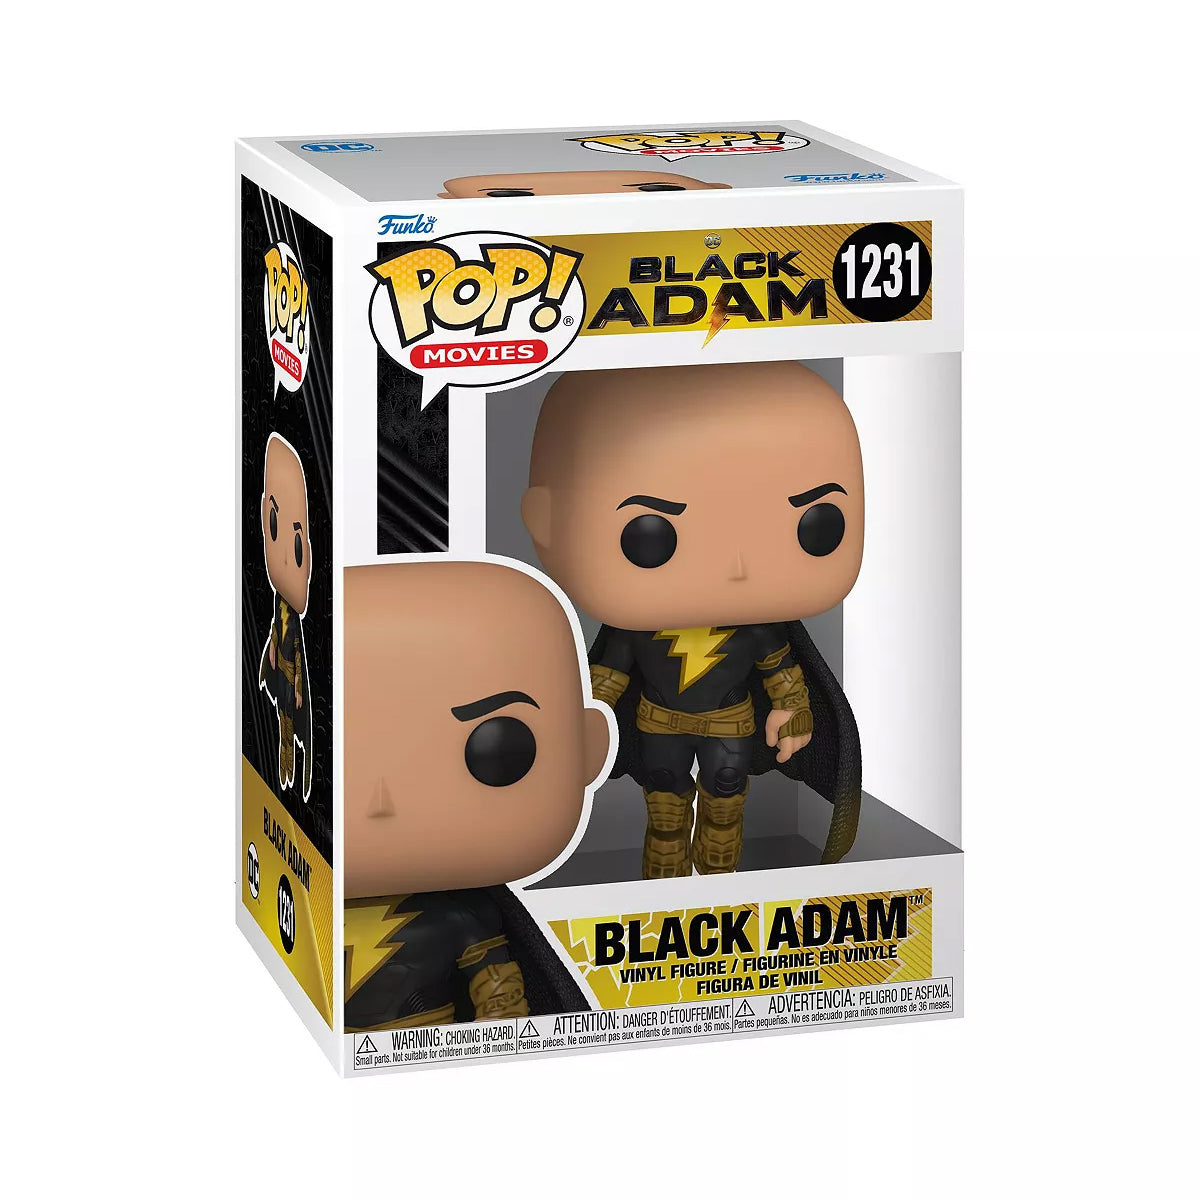 Black Adam #1231 Pop!